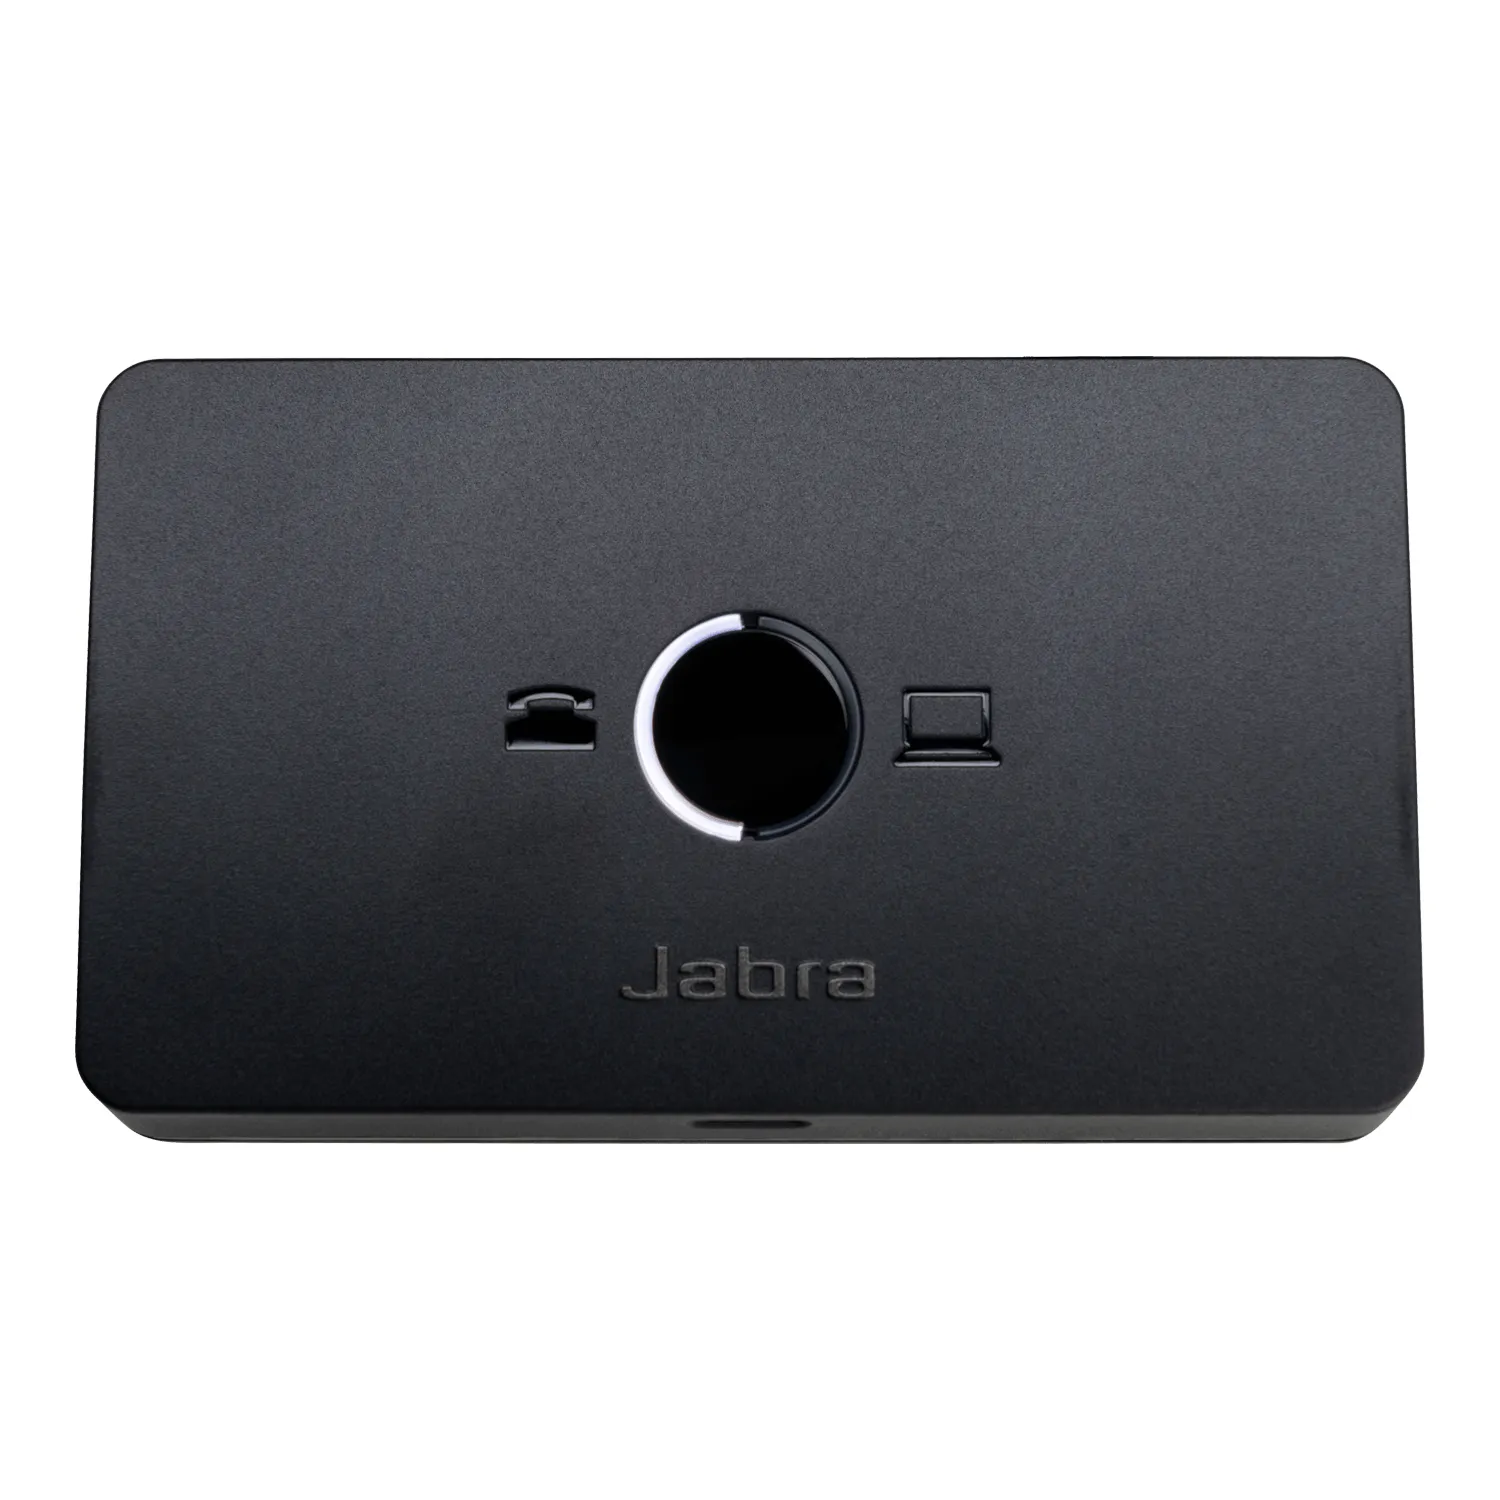 Vente Jabra Link 950 Jabra au meilleur prix - visuel 2